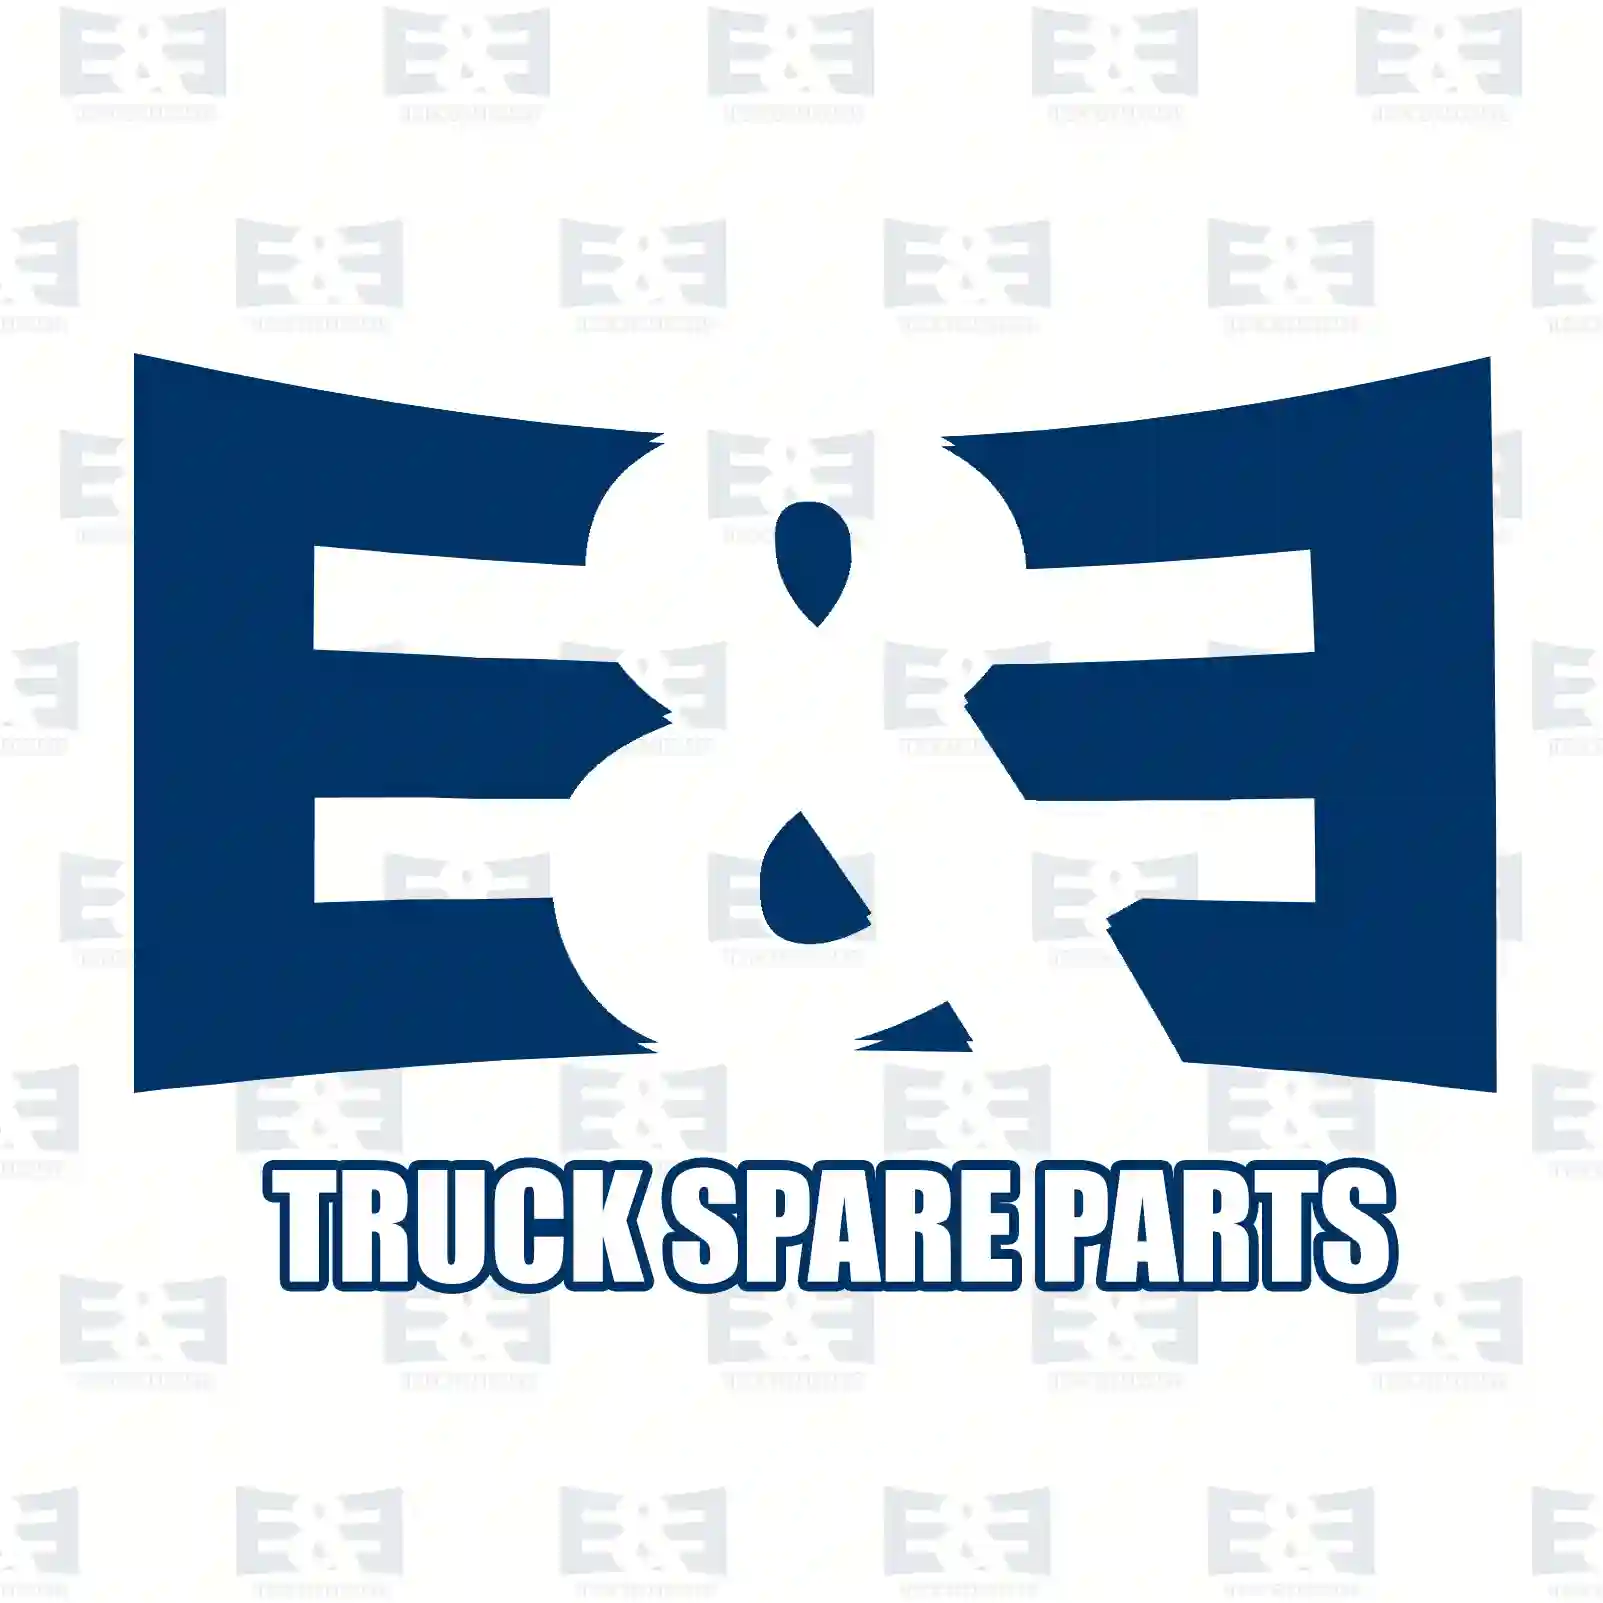 Ball joint, control arm, 2E2279838, 42567706, 500333278, 5006303711 ||  2E2279838 E&E Truck Spare Parts | Truck Spare Parts, Auotomotive Spare Parts Ball joint, control arm, 2E2279838, 42567706, 500333278, 5006303711 ||  2E2279838 E&E Truck Spare Parts | Truck Spare Parts, Auotomotive Spare Parts